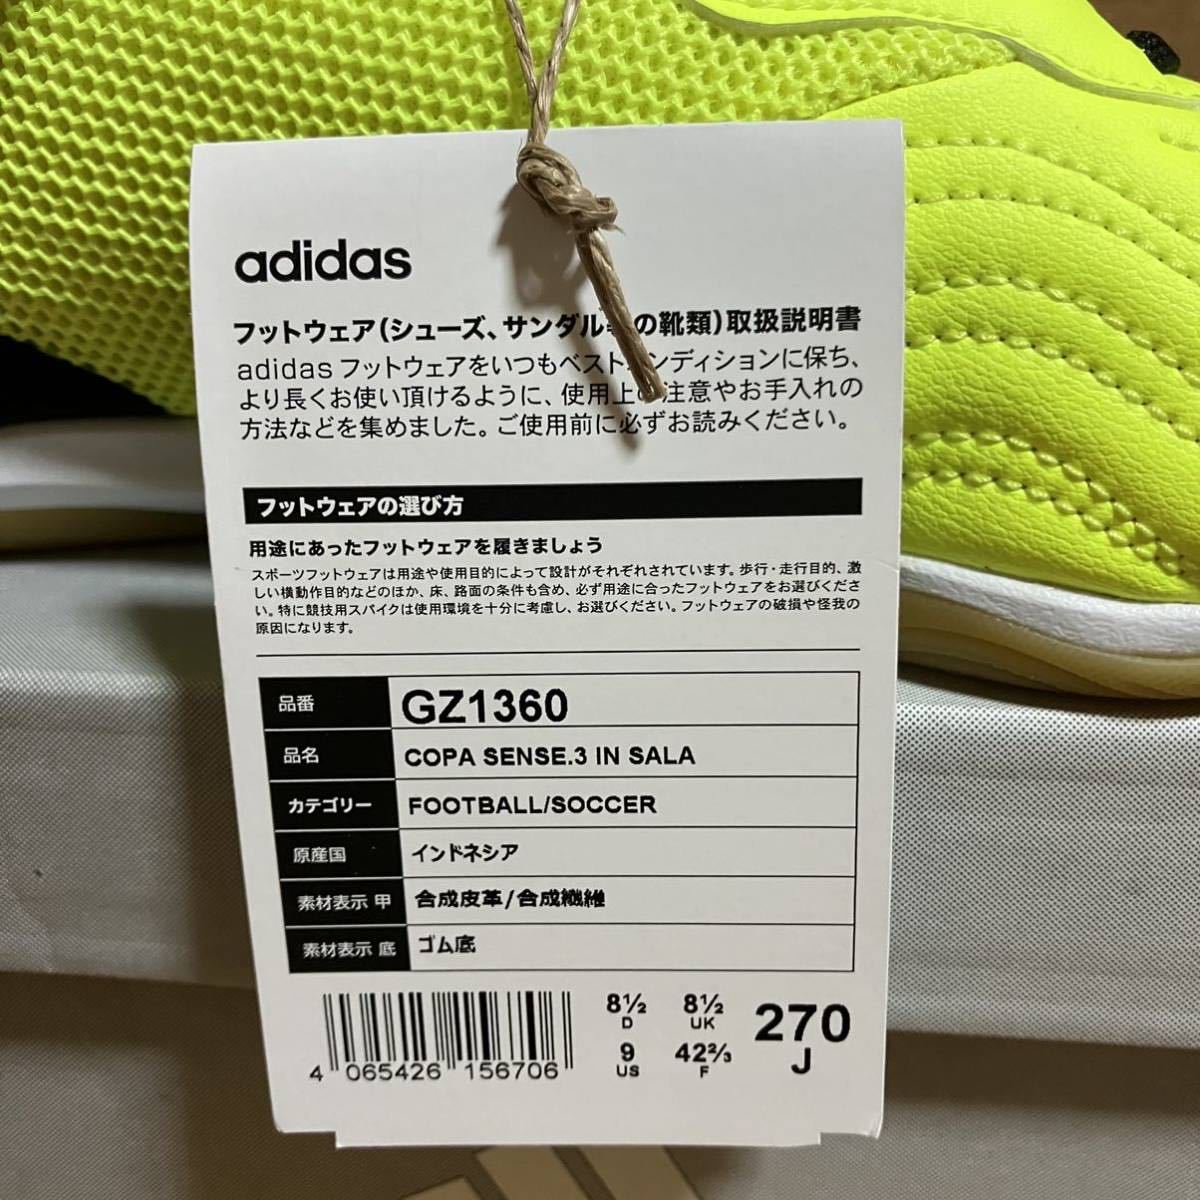 adidas Adidas kopa чувство.3INSALA GZ1360 мужской футзал обувь 27.0cm включая доставку 